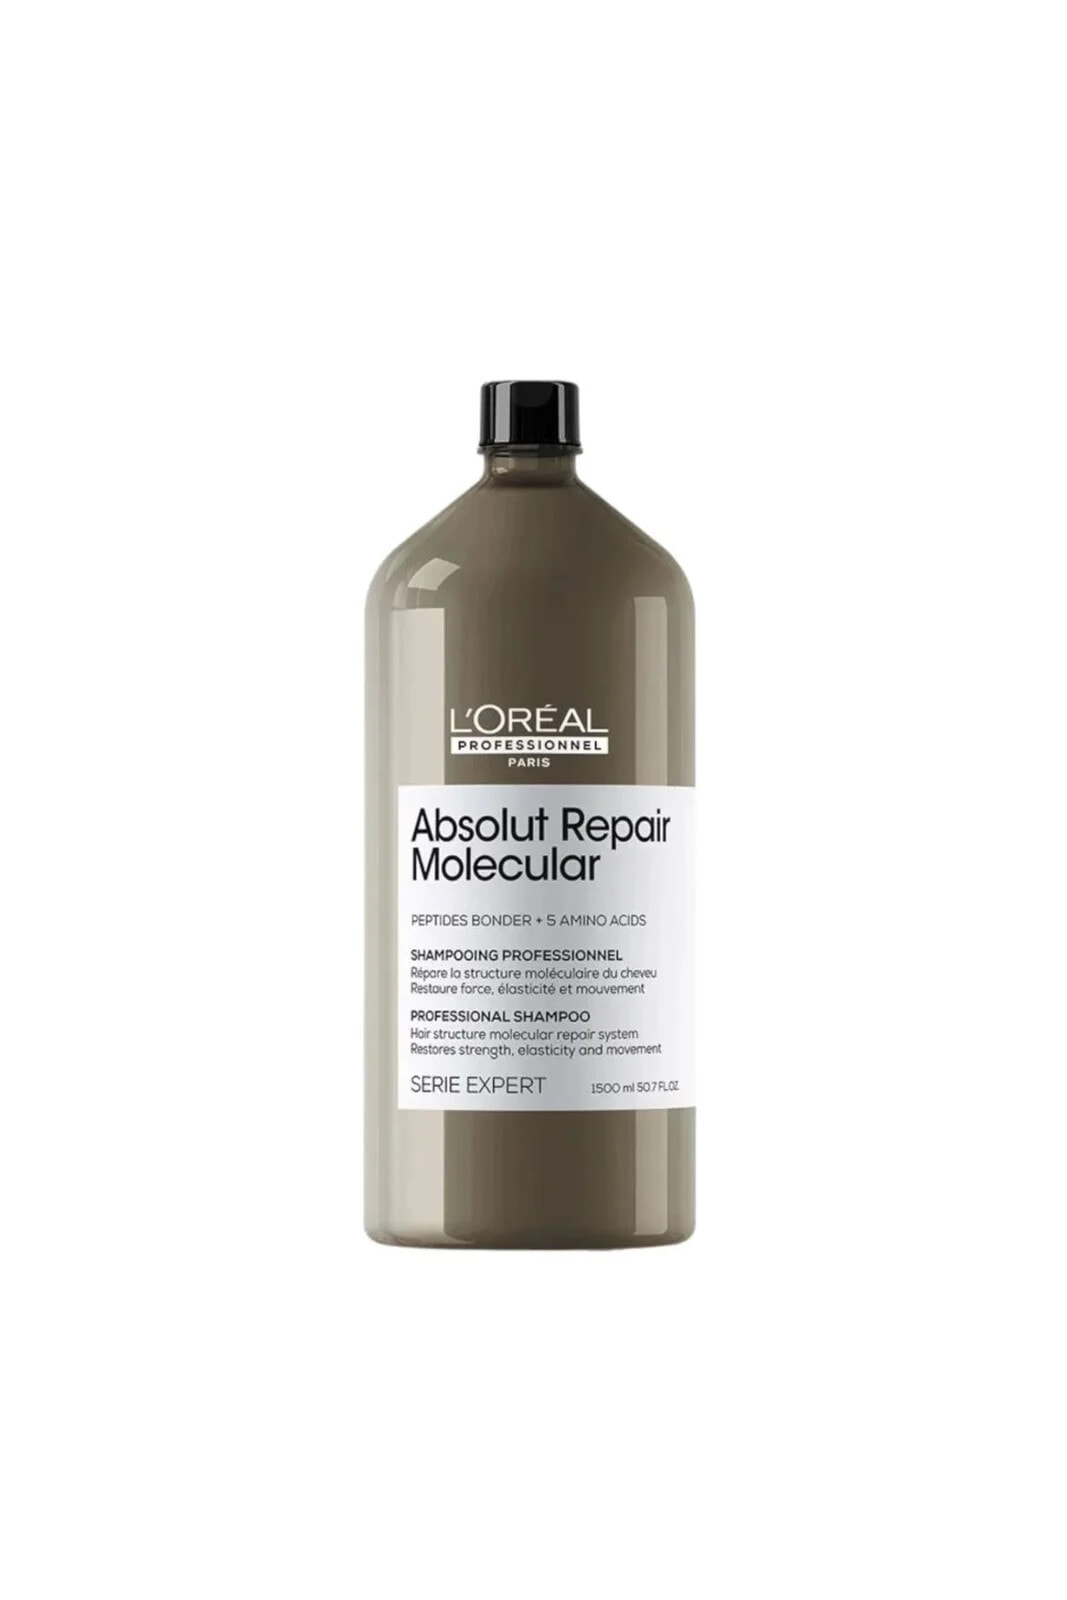 L'Oréal Série Expert Absolut Repair Molecular Shampoo - 1500 ml eva2233